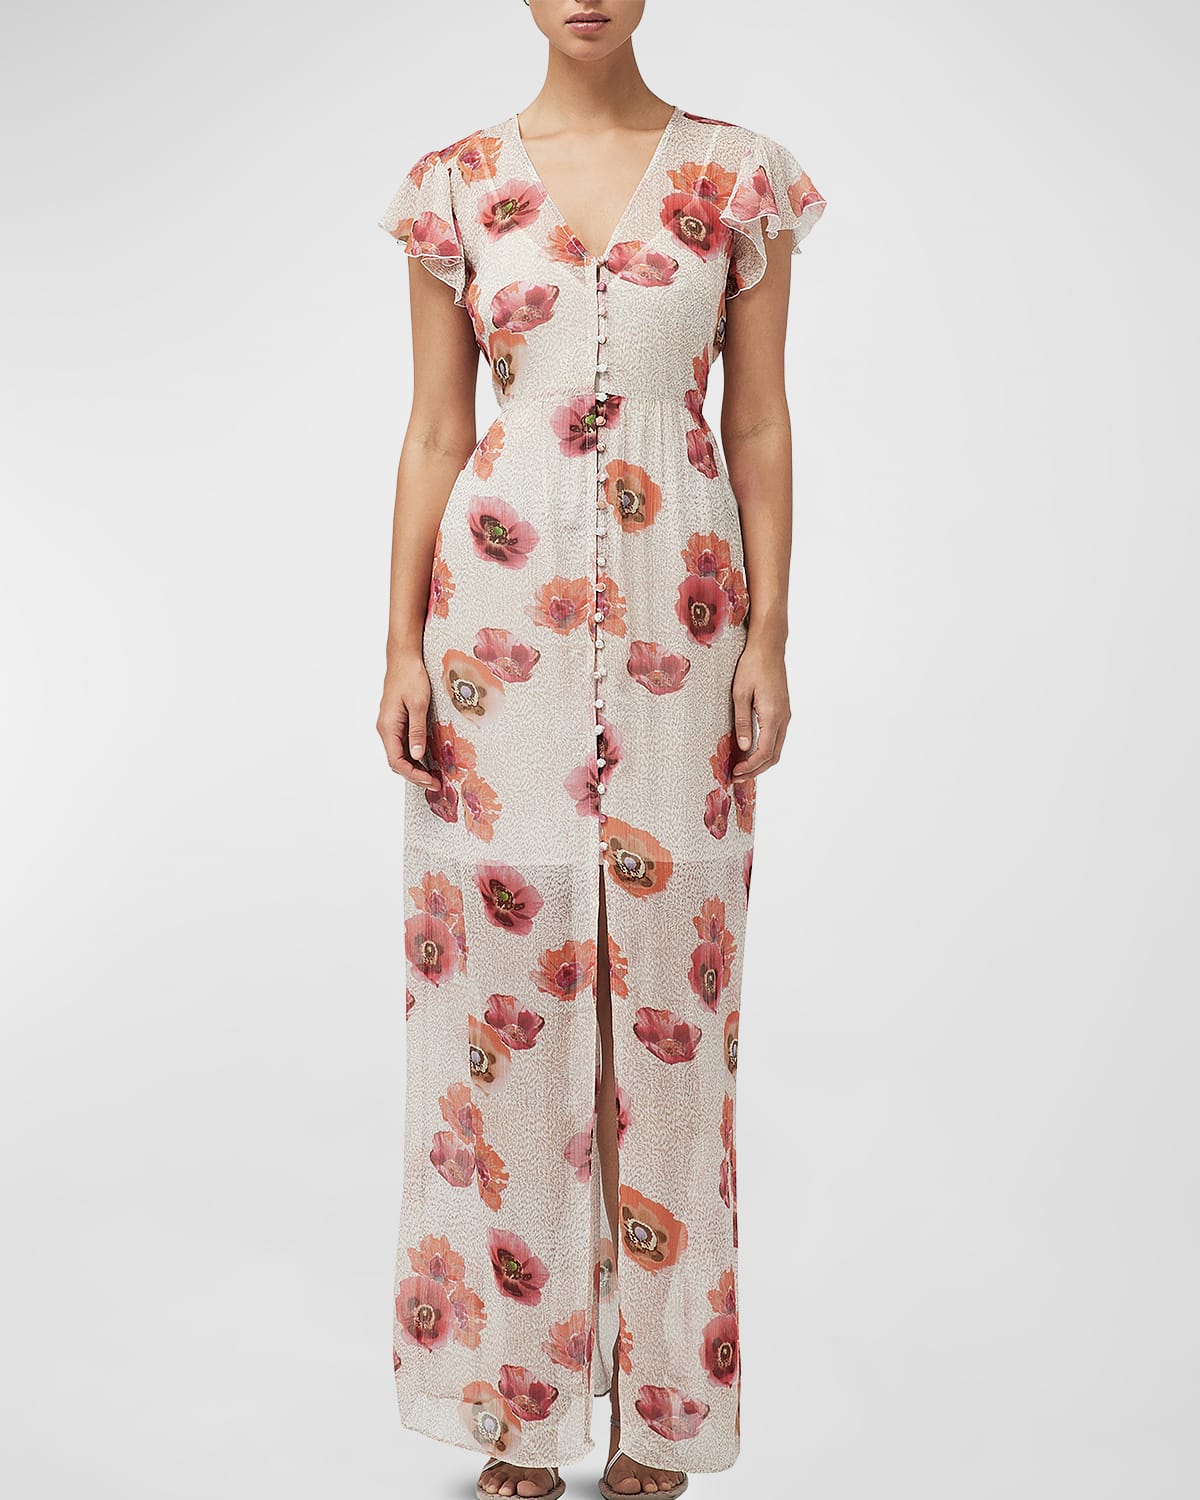 Raine Floral Maxi Dress